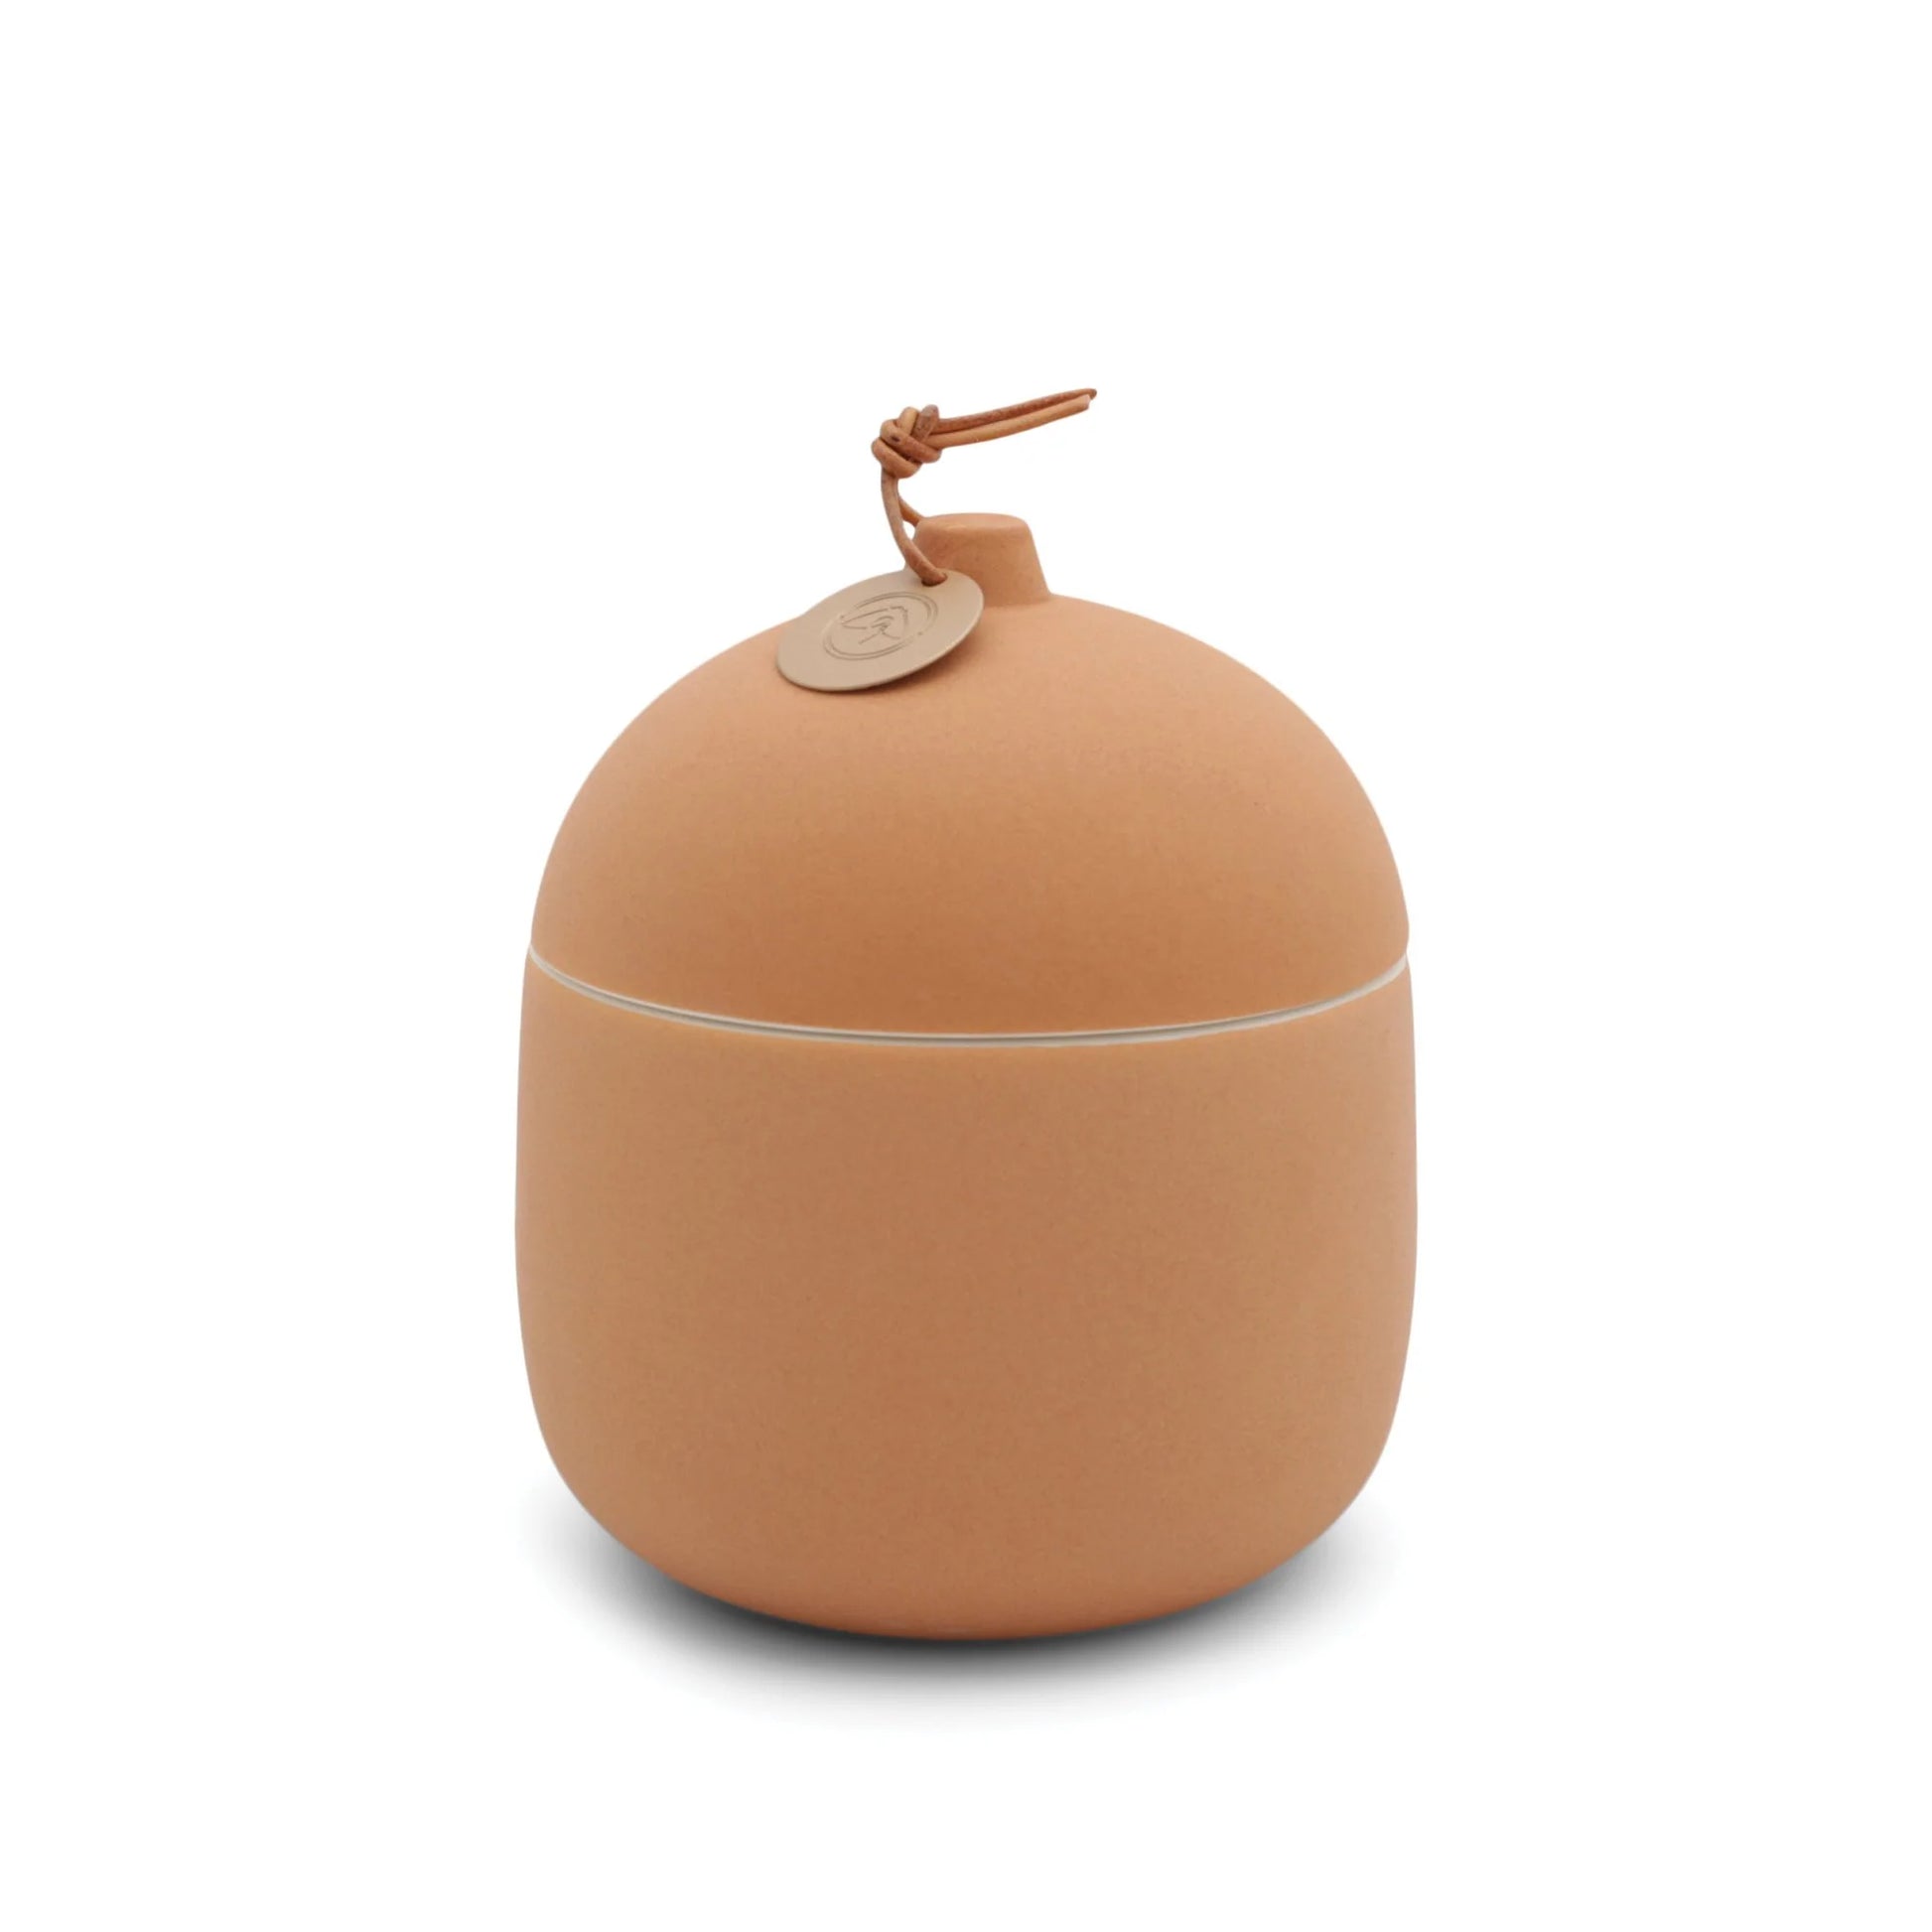 Keepsake 12 oz Candle - Amber Woods - orange colored clay vessel